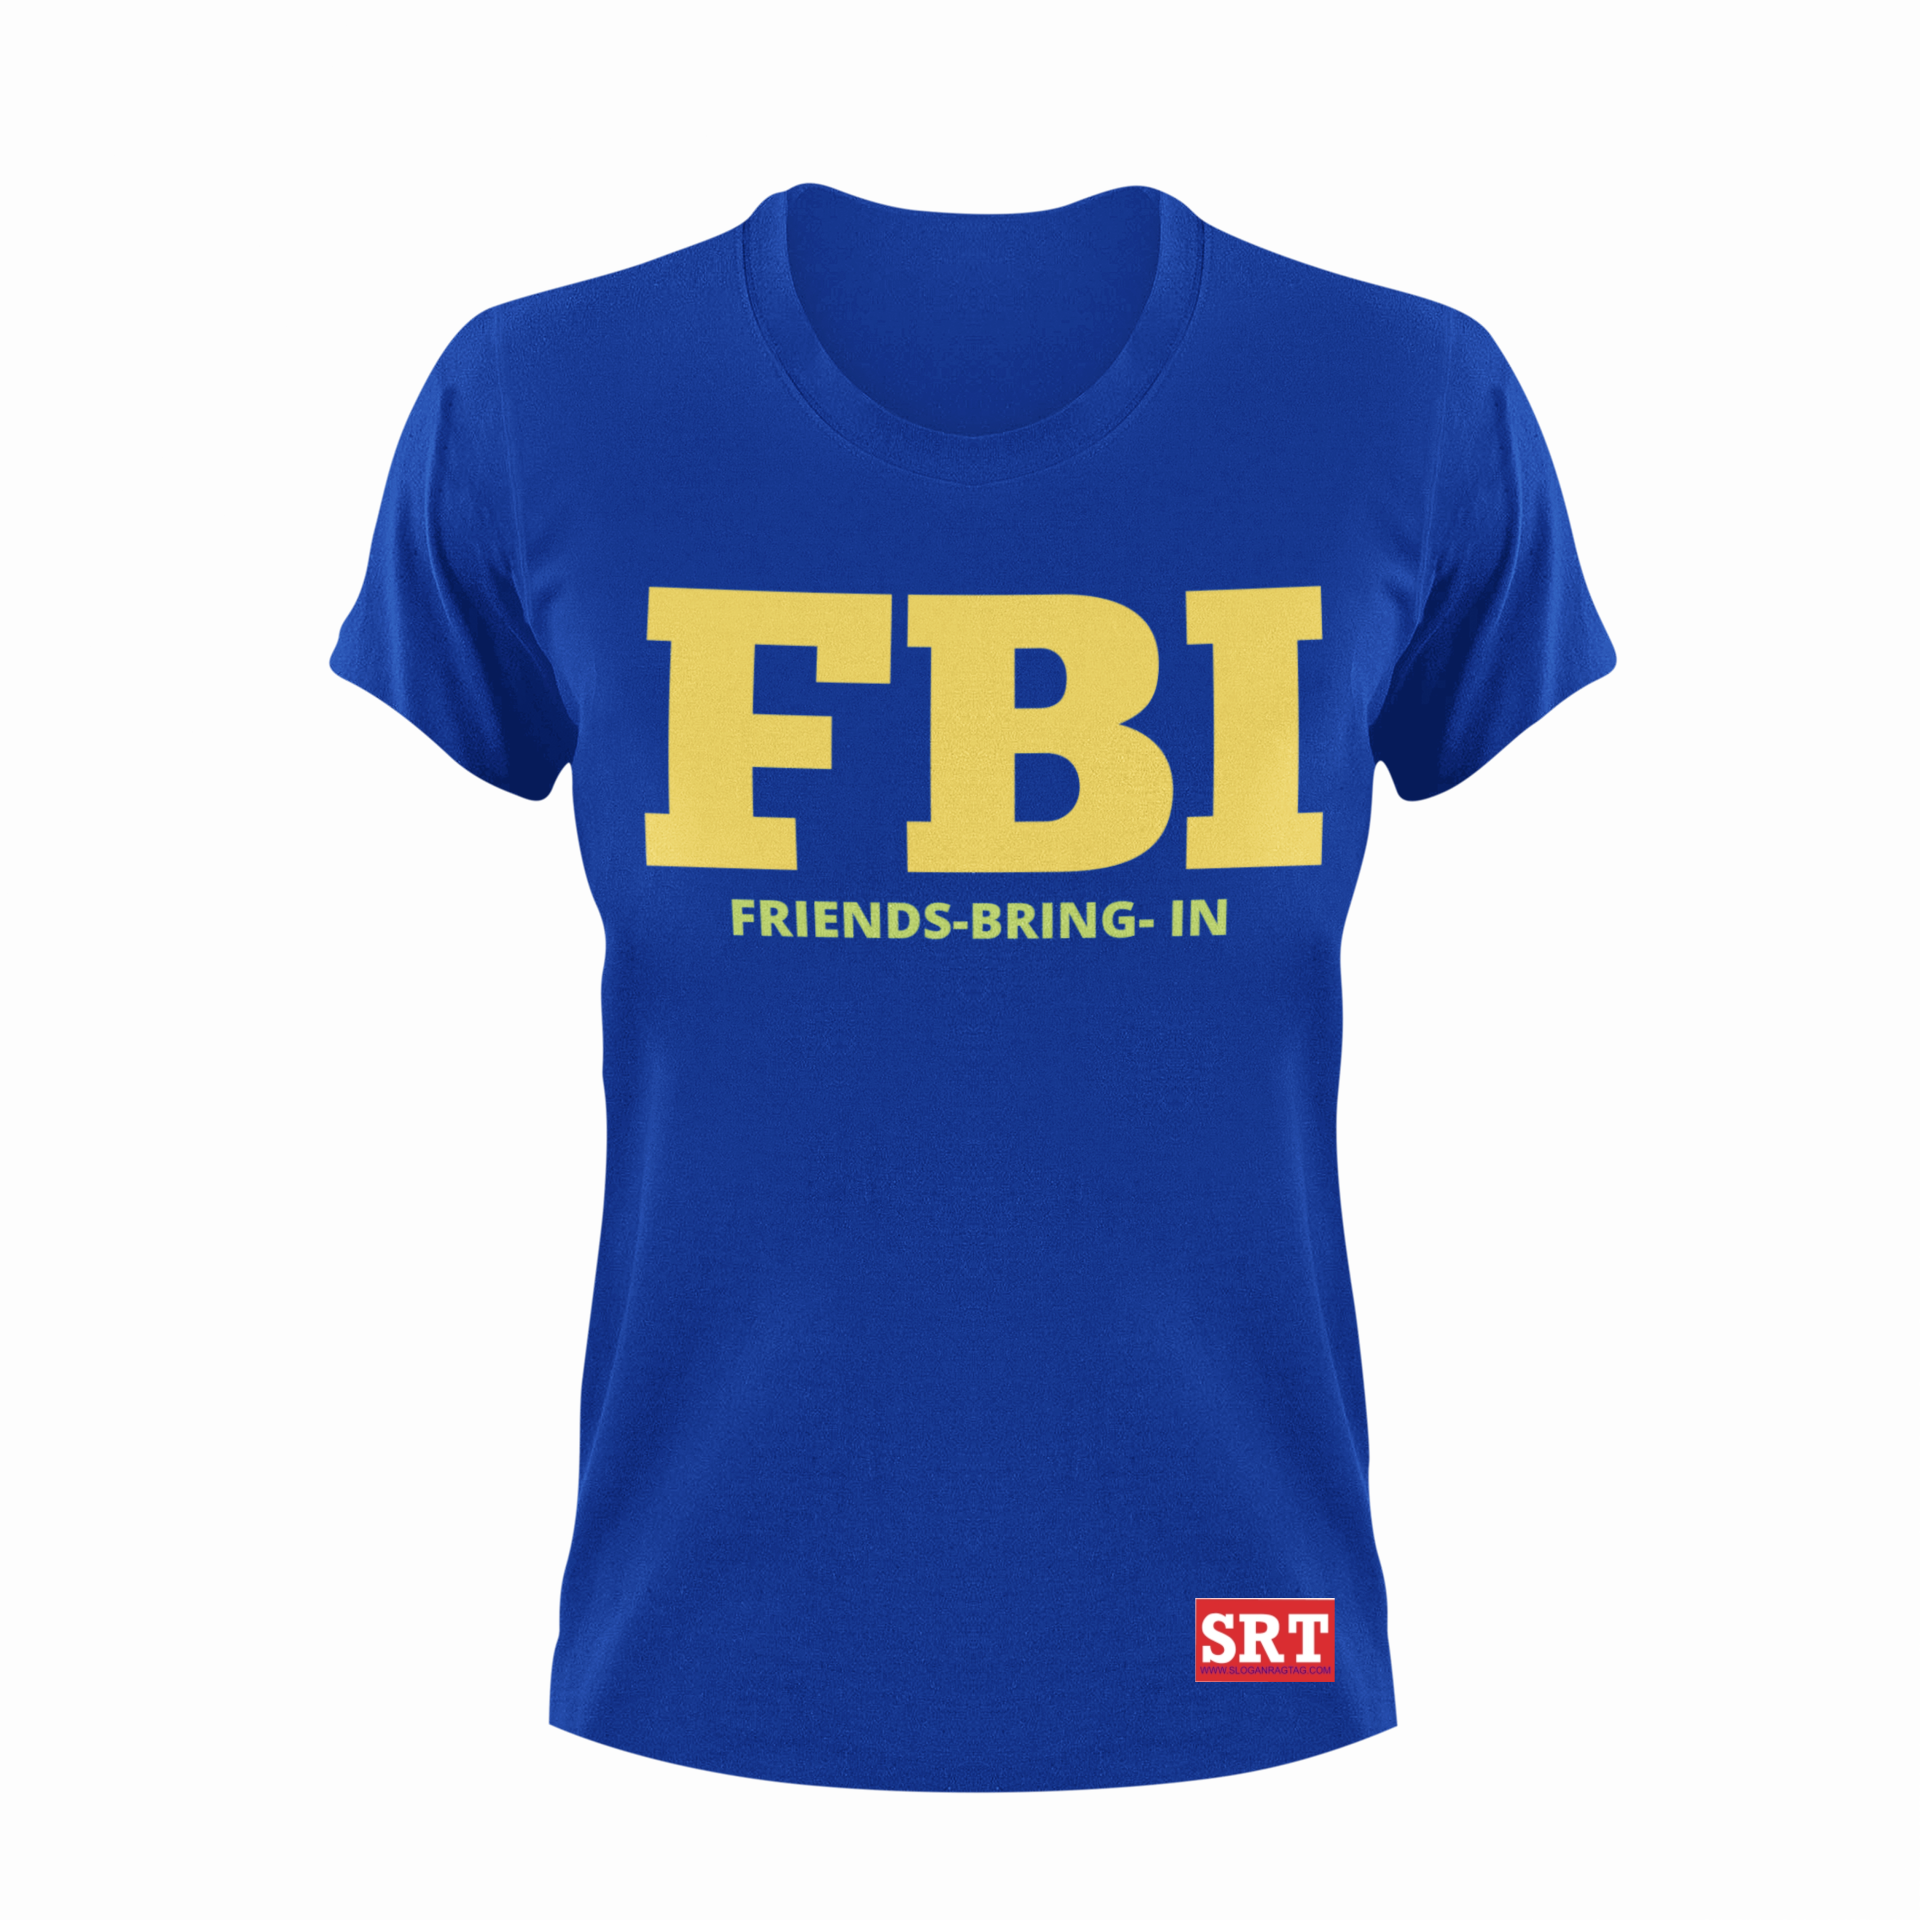 FBI NOVELTY DOOD'S